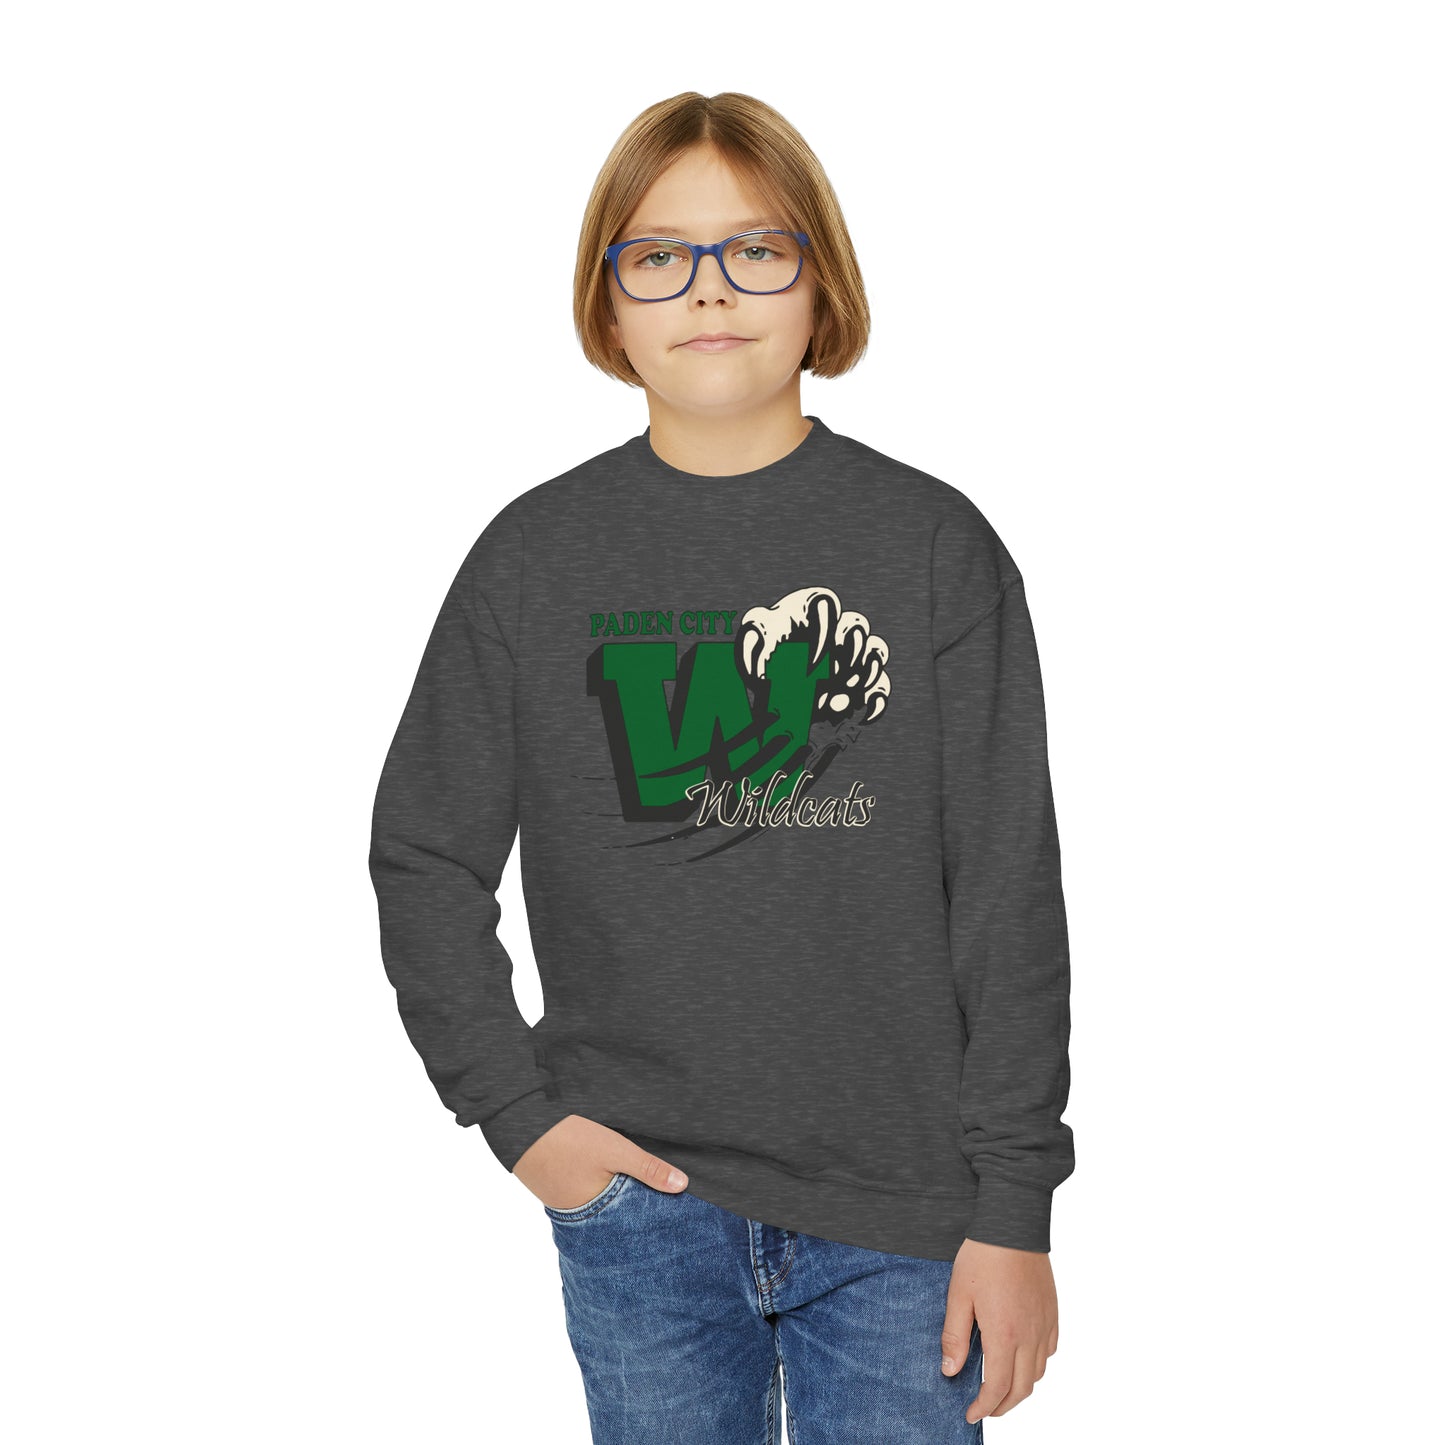 Youth Crewneck Sweatshirt - PC2